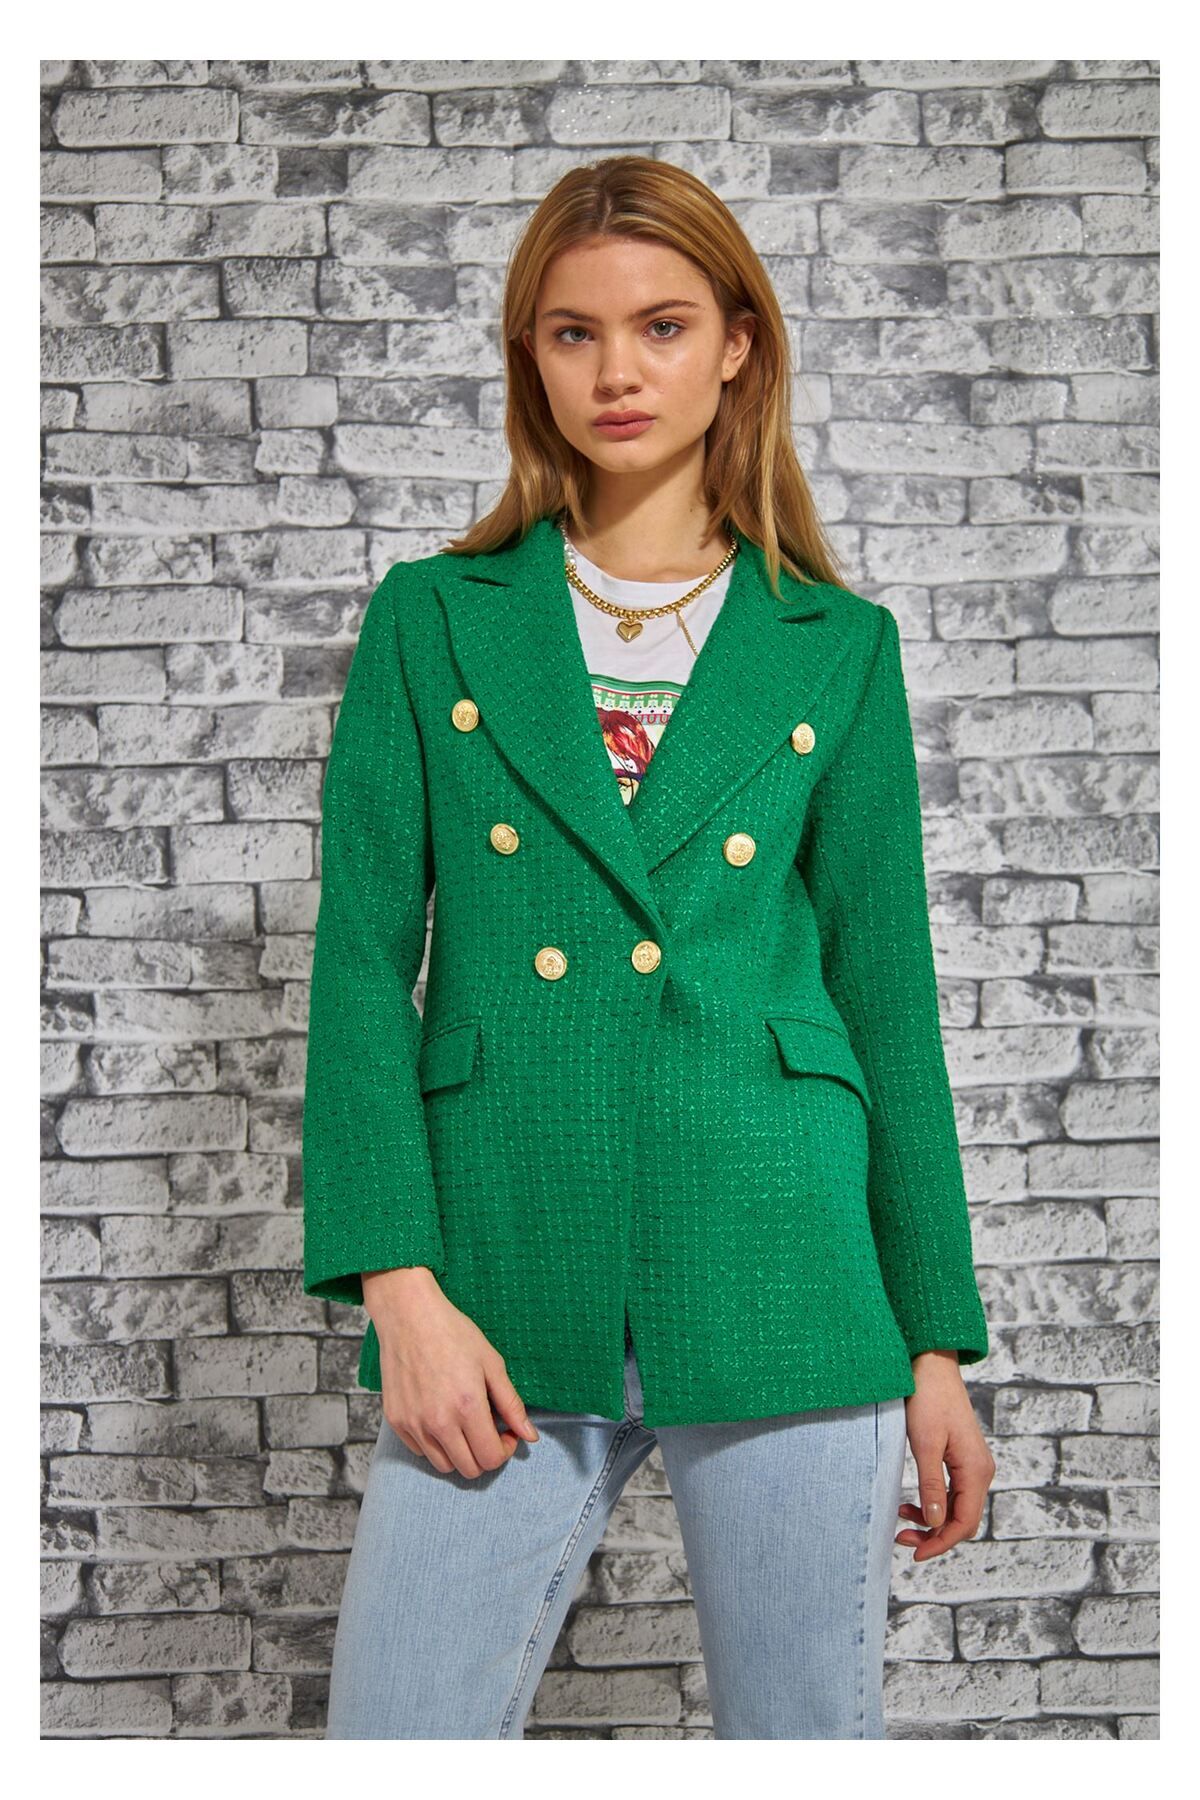 Tiffany Tomato Düğmeli Channel Ceket-yeşil